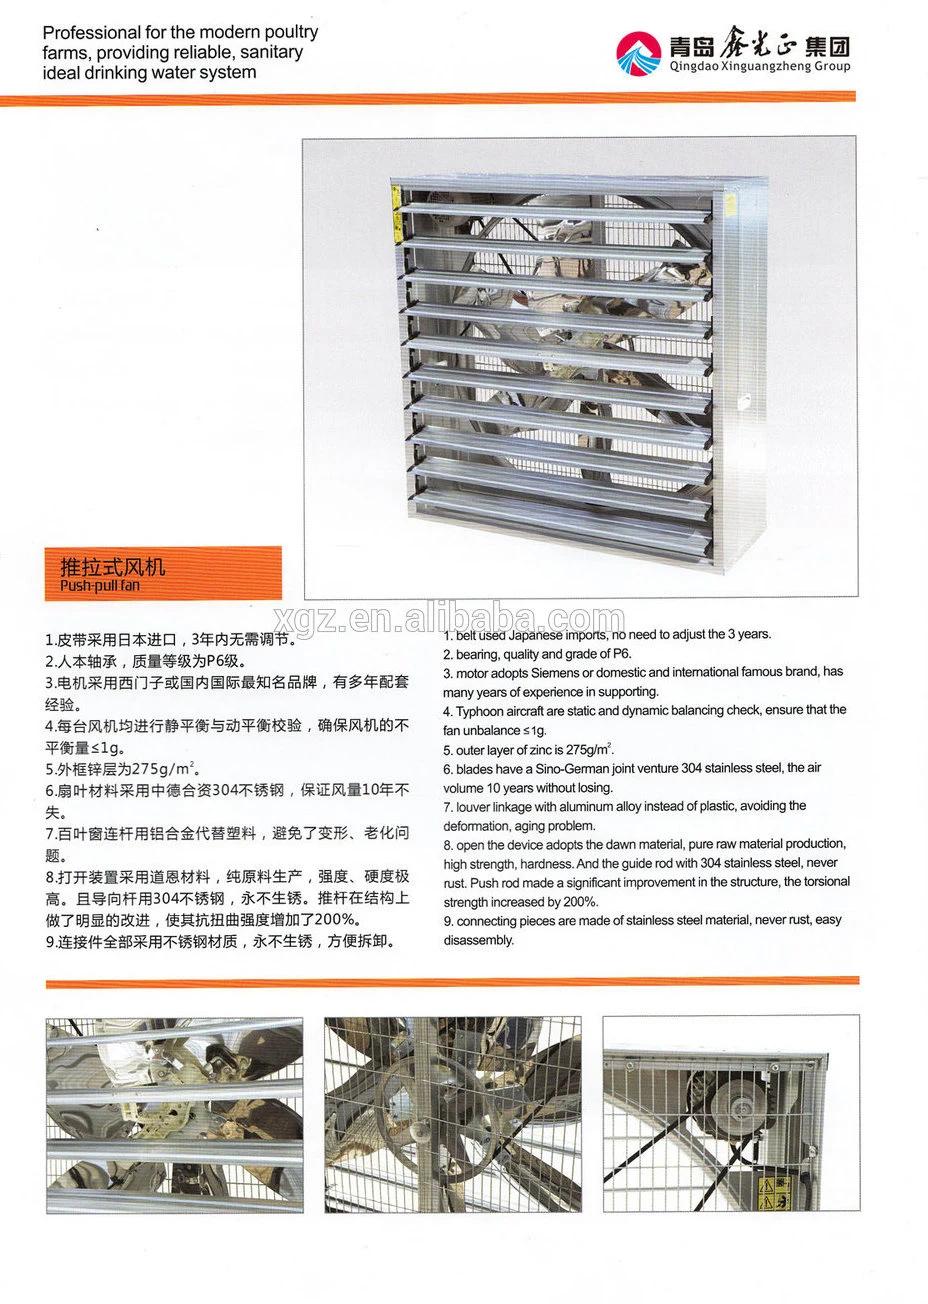 Xinguangzheng Automatic Poultry Farm Mechanical Equipment for Broiler Chicken